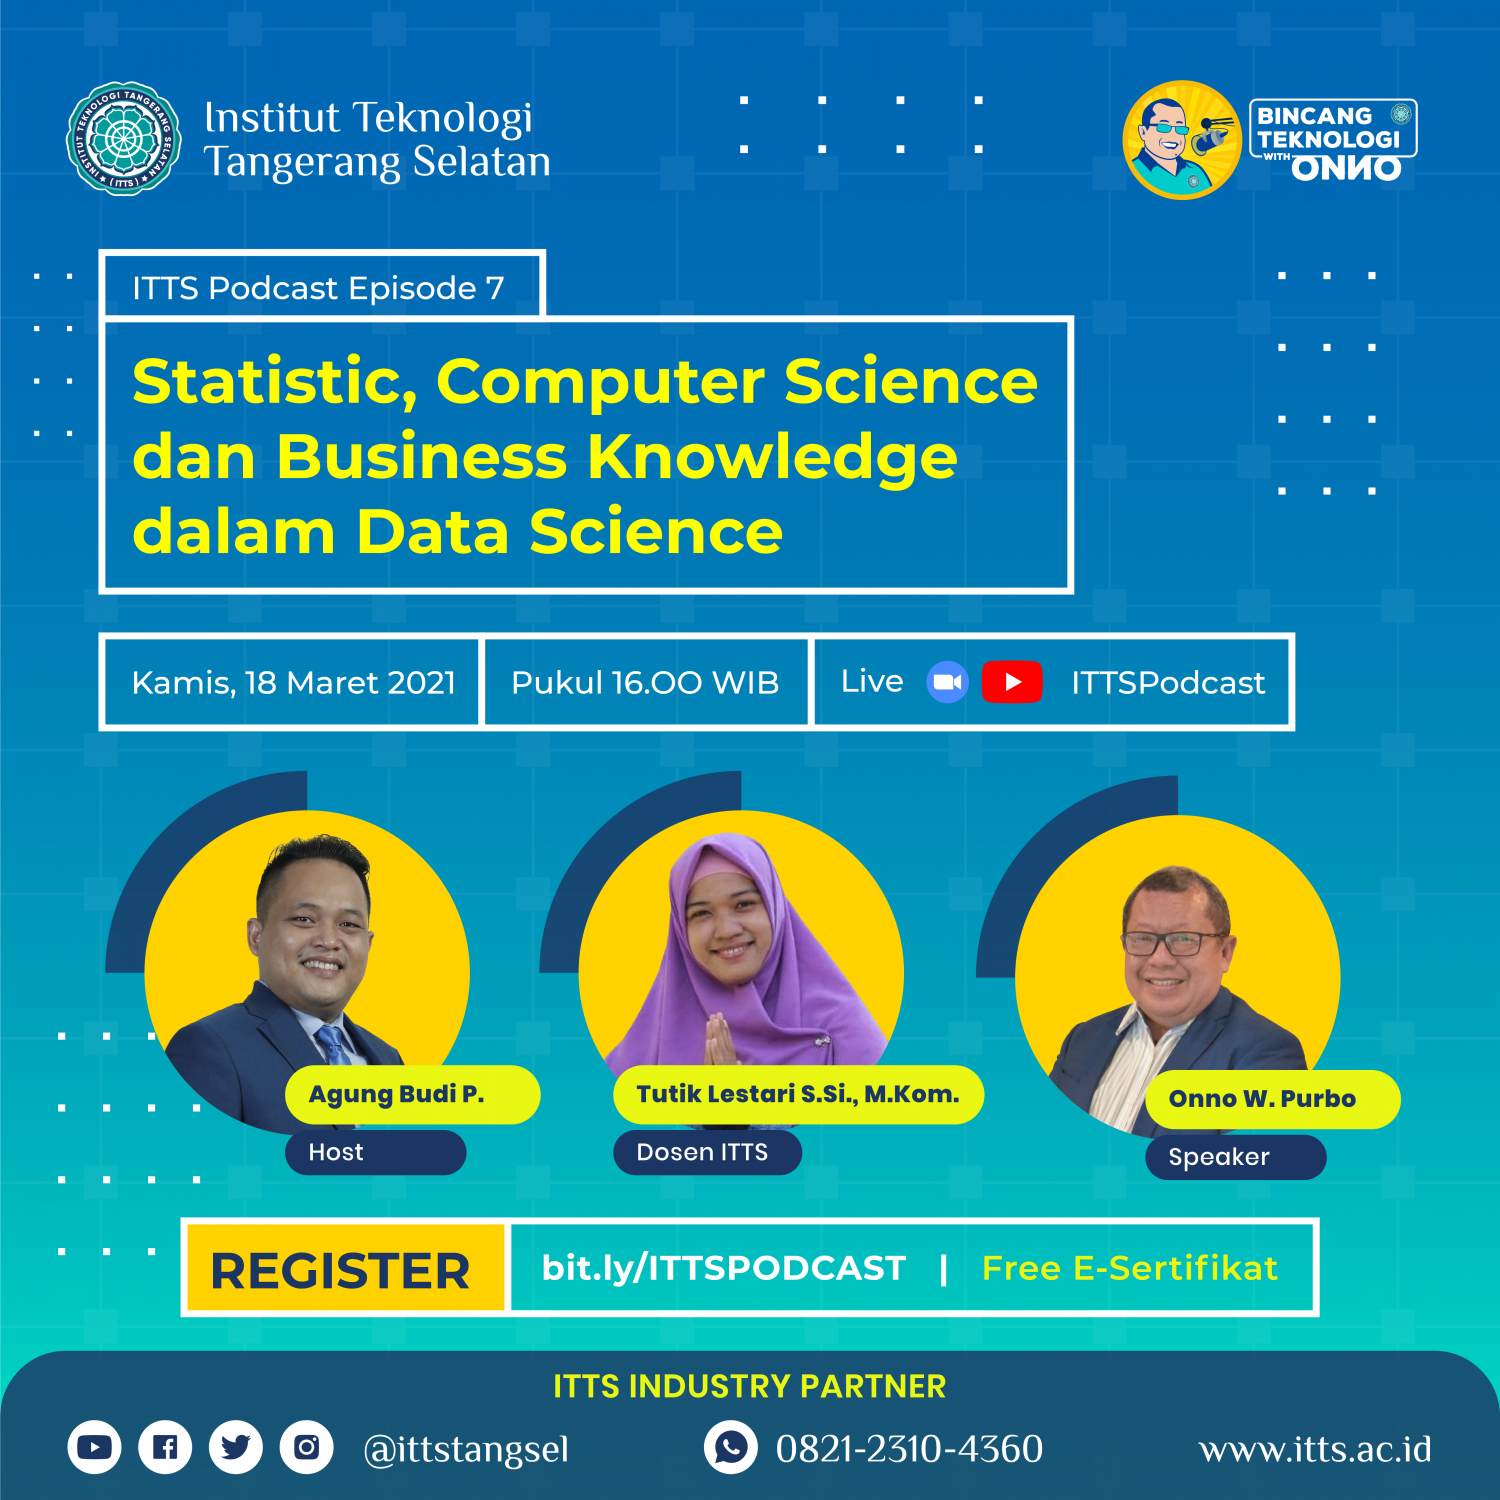 ITTSPODCAST Episode 7 - Statistic, Computer Science dan Business Knowledge dalam Data Science